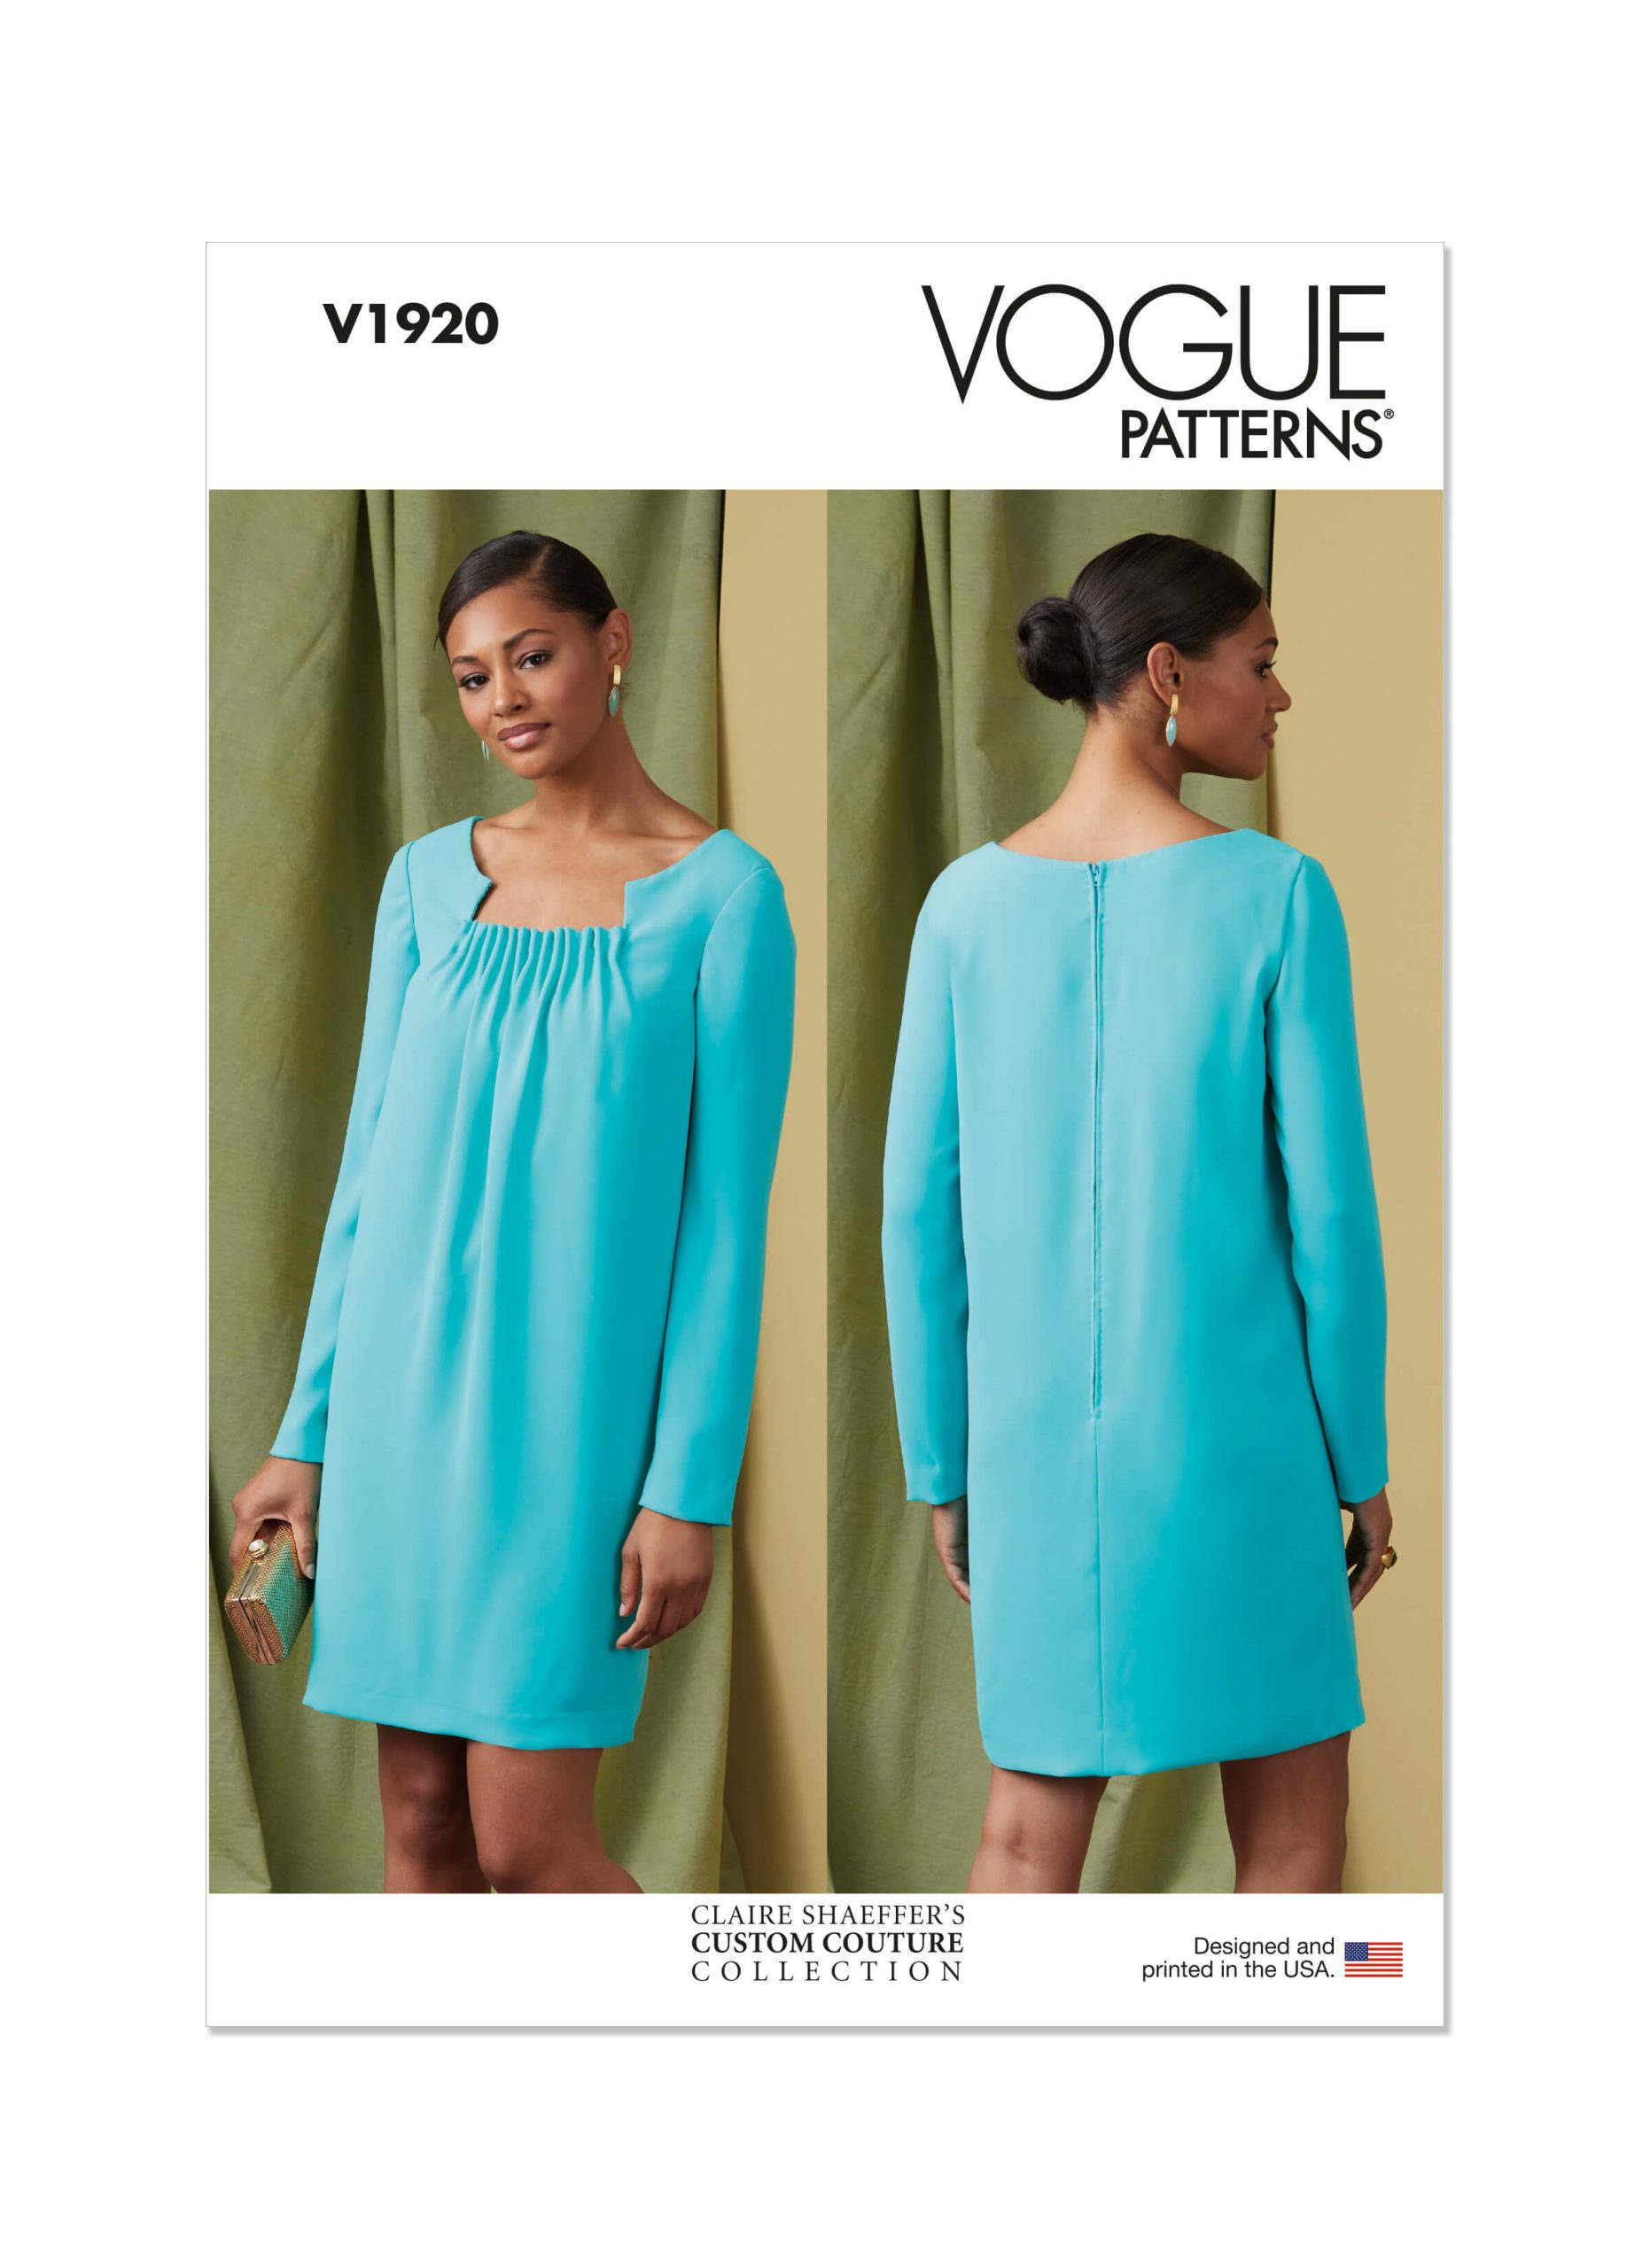 Vogue Patterns V1920 Misses' Dress by Claire Shaeffer